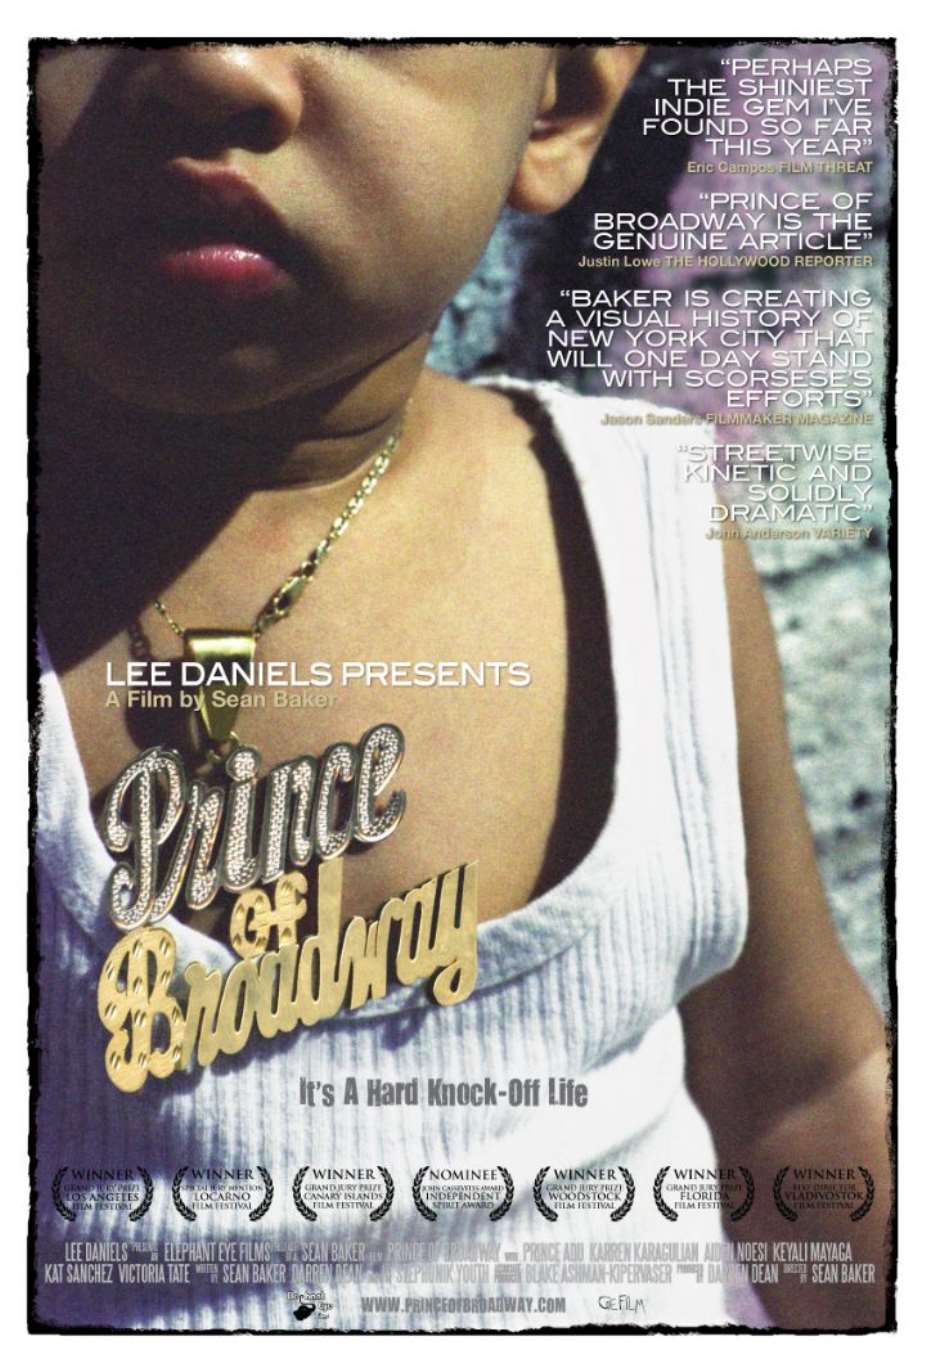 Lee Daniels Presents Prince of Broadway A film by Sean Baker